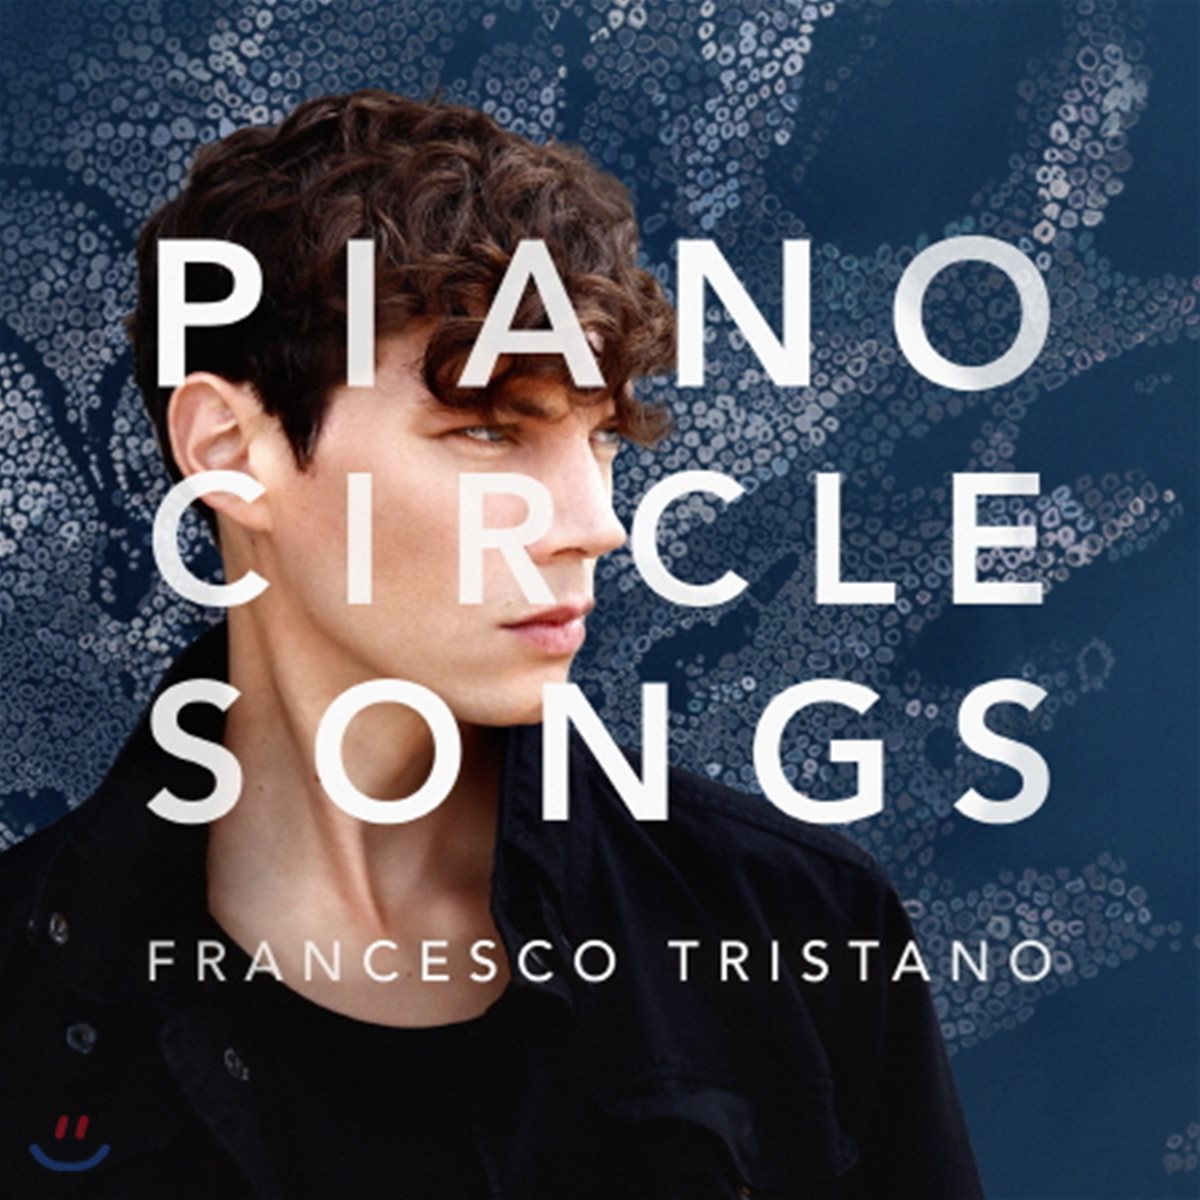 Francesco Tristano 프란체스코 트리스타노 - 피아노 서클 송 (Piano Circle Songs)